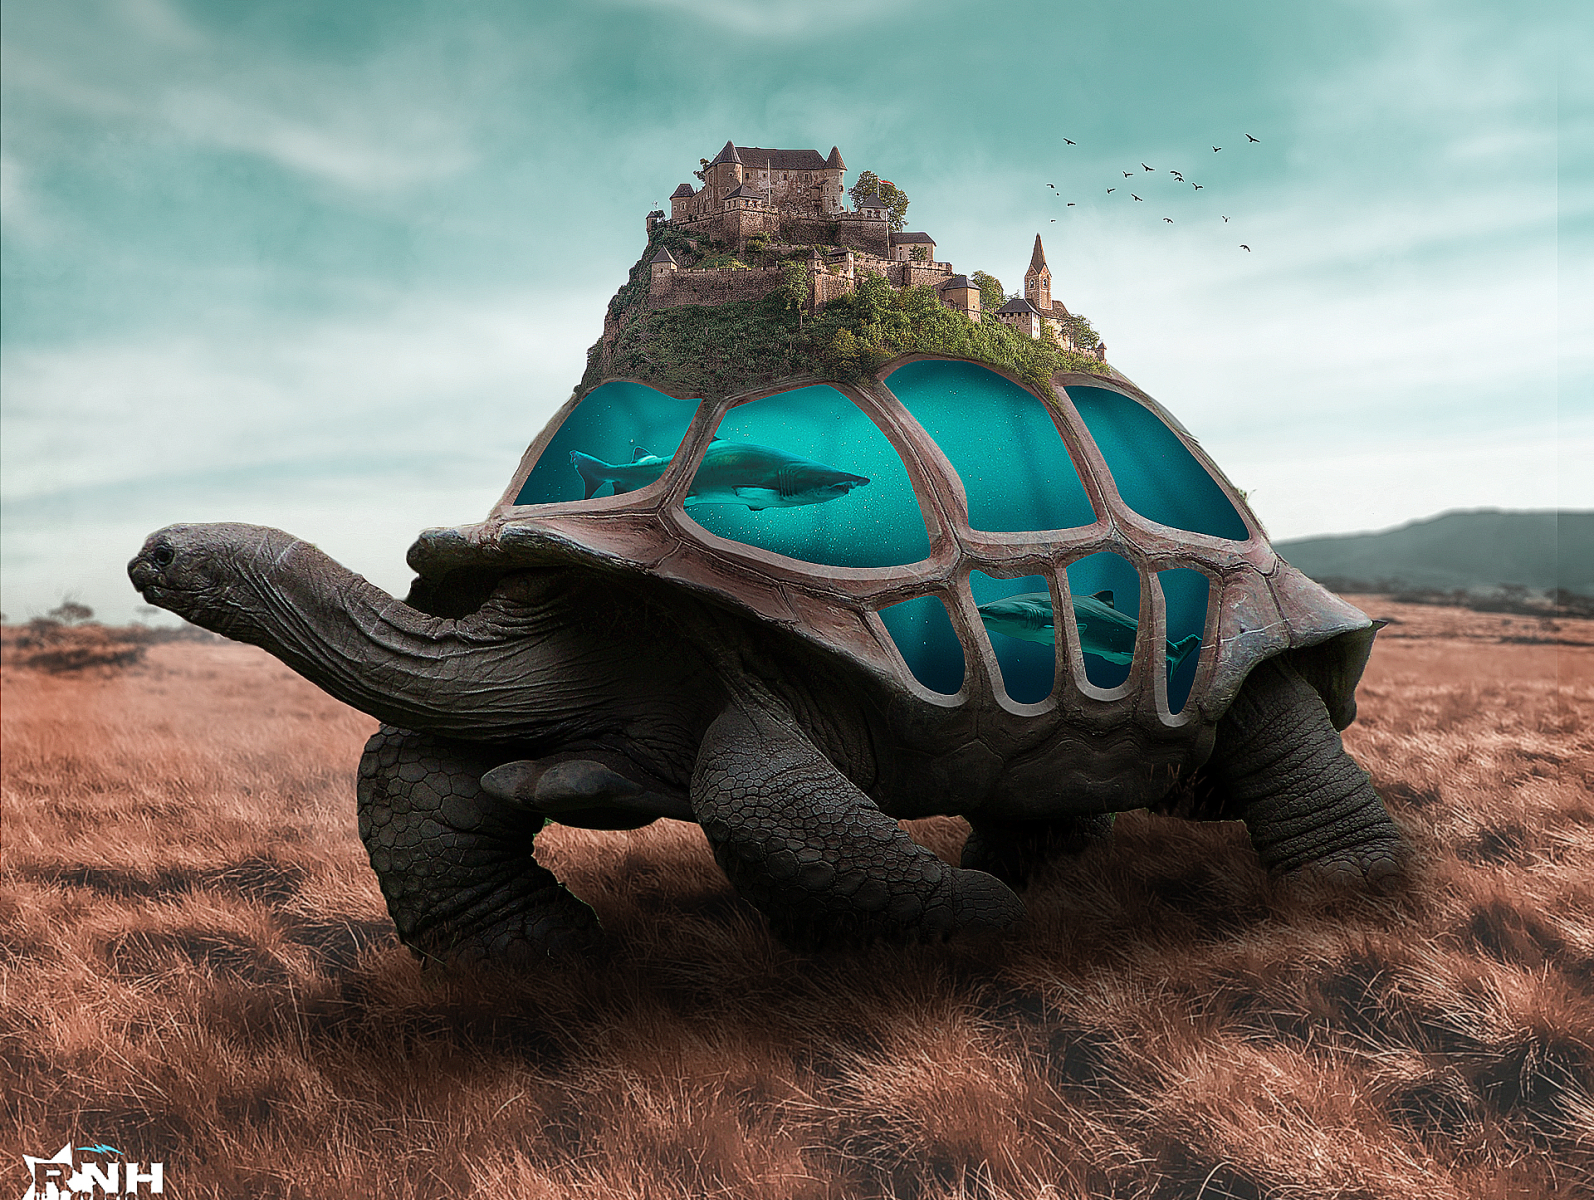 Tortoise underwater surelisme by Revaldo NH on Dribbble